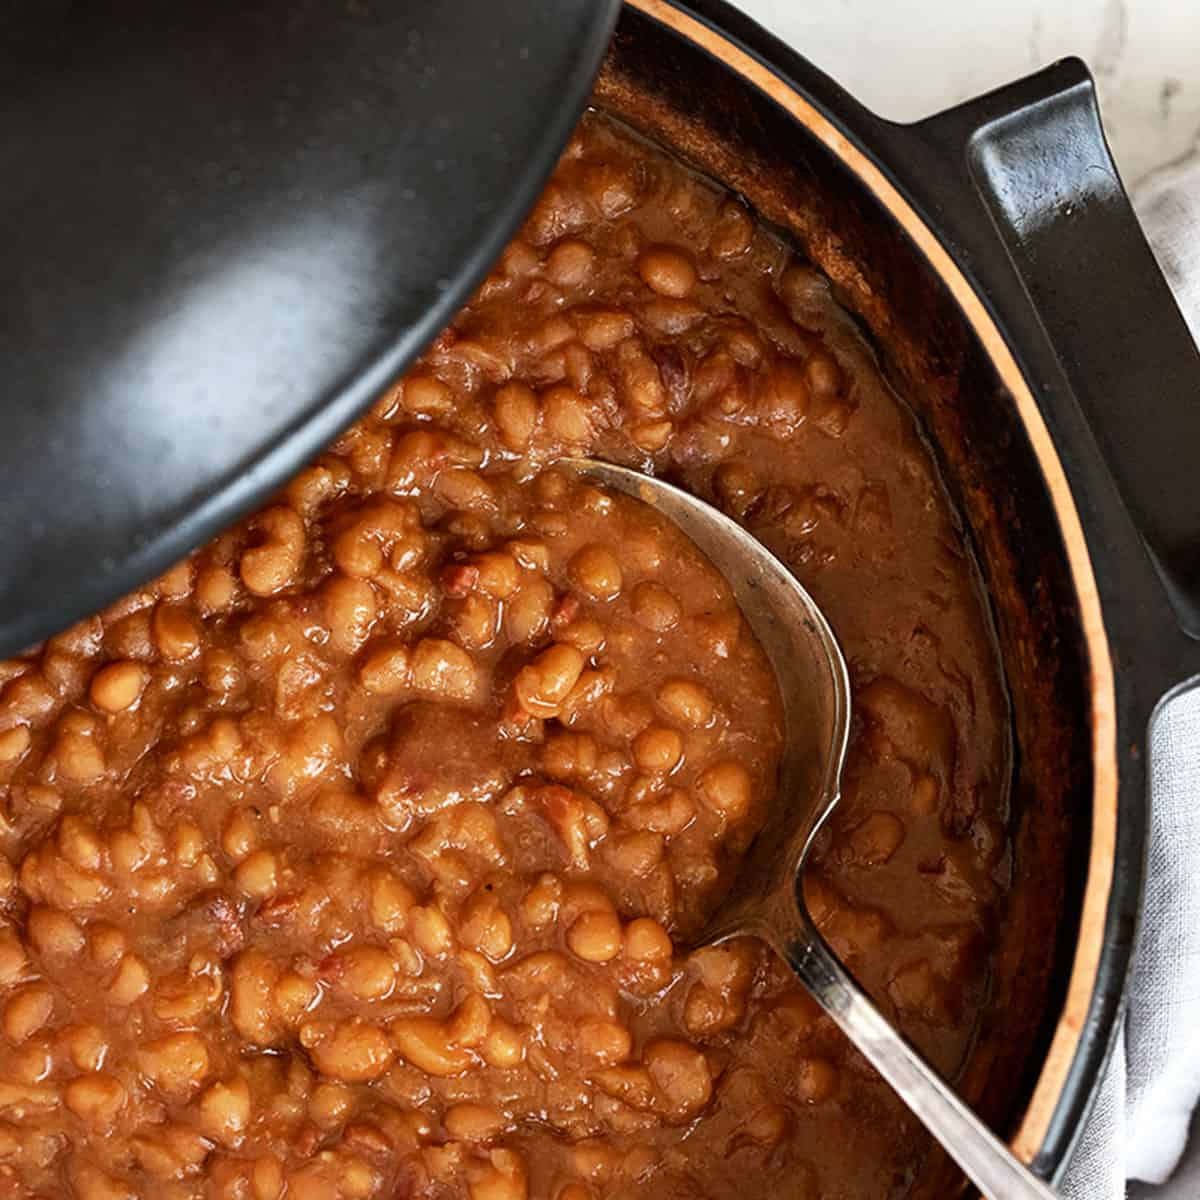 https://www.seasonsandsuppers.ca/wp-content/uploads/2022/03/maple-baked-beans-1200.jpg